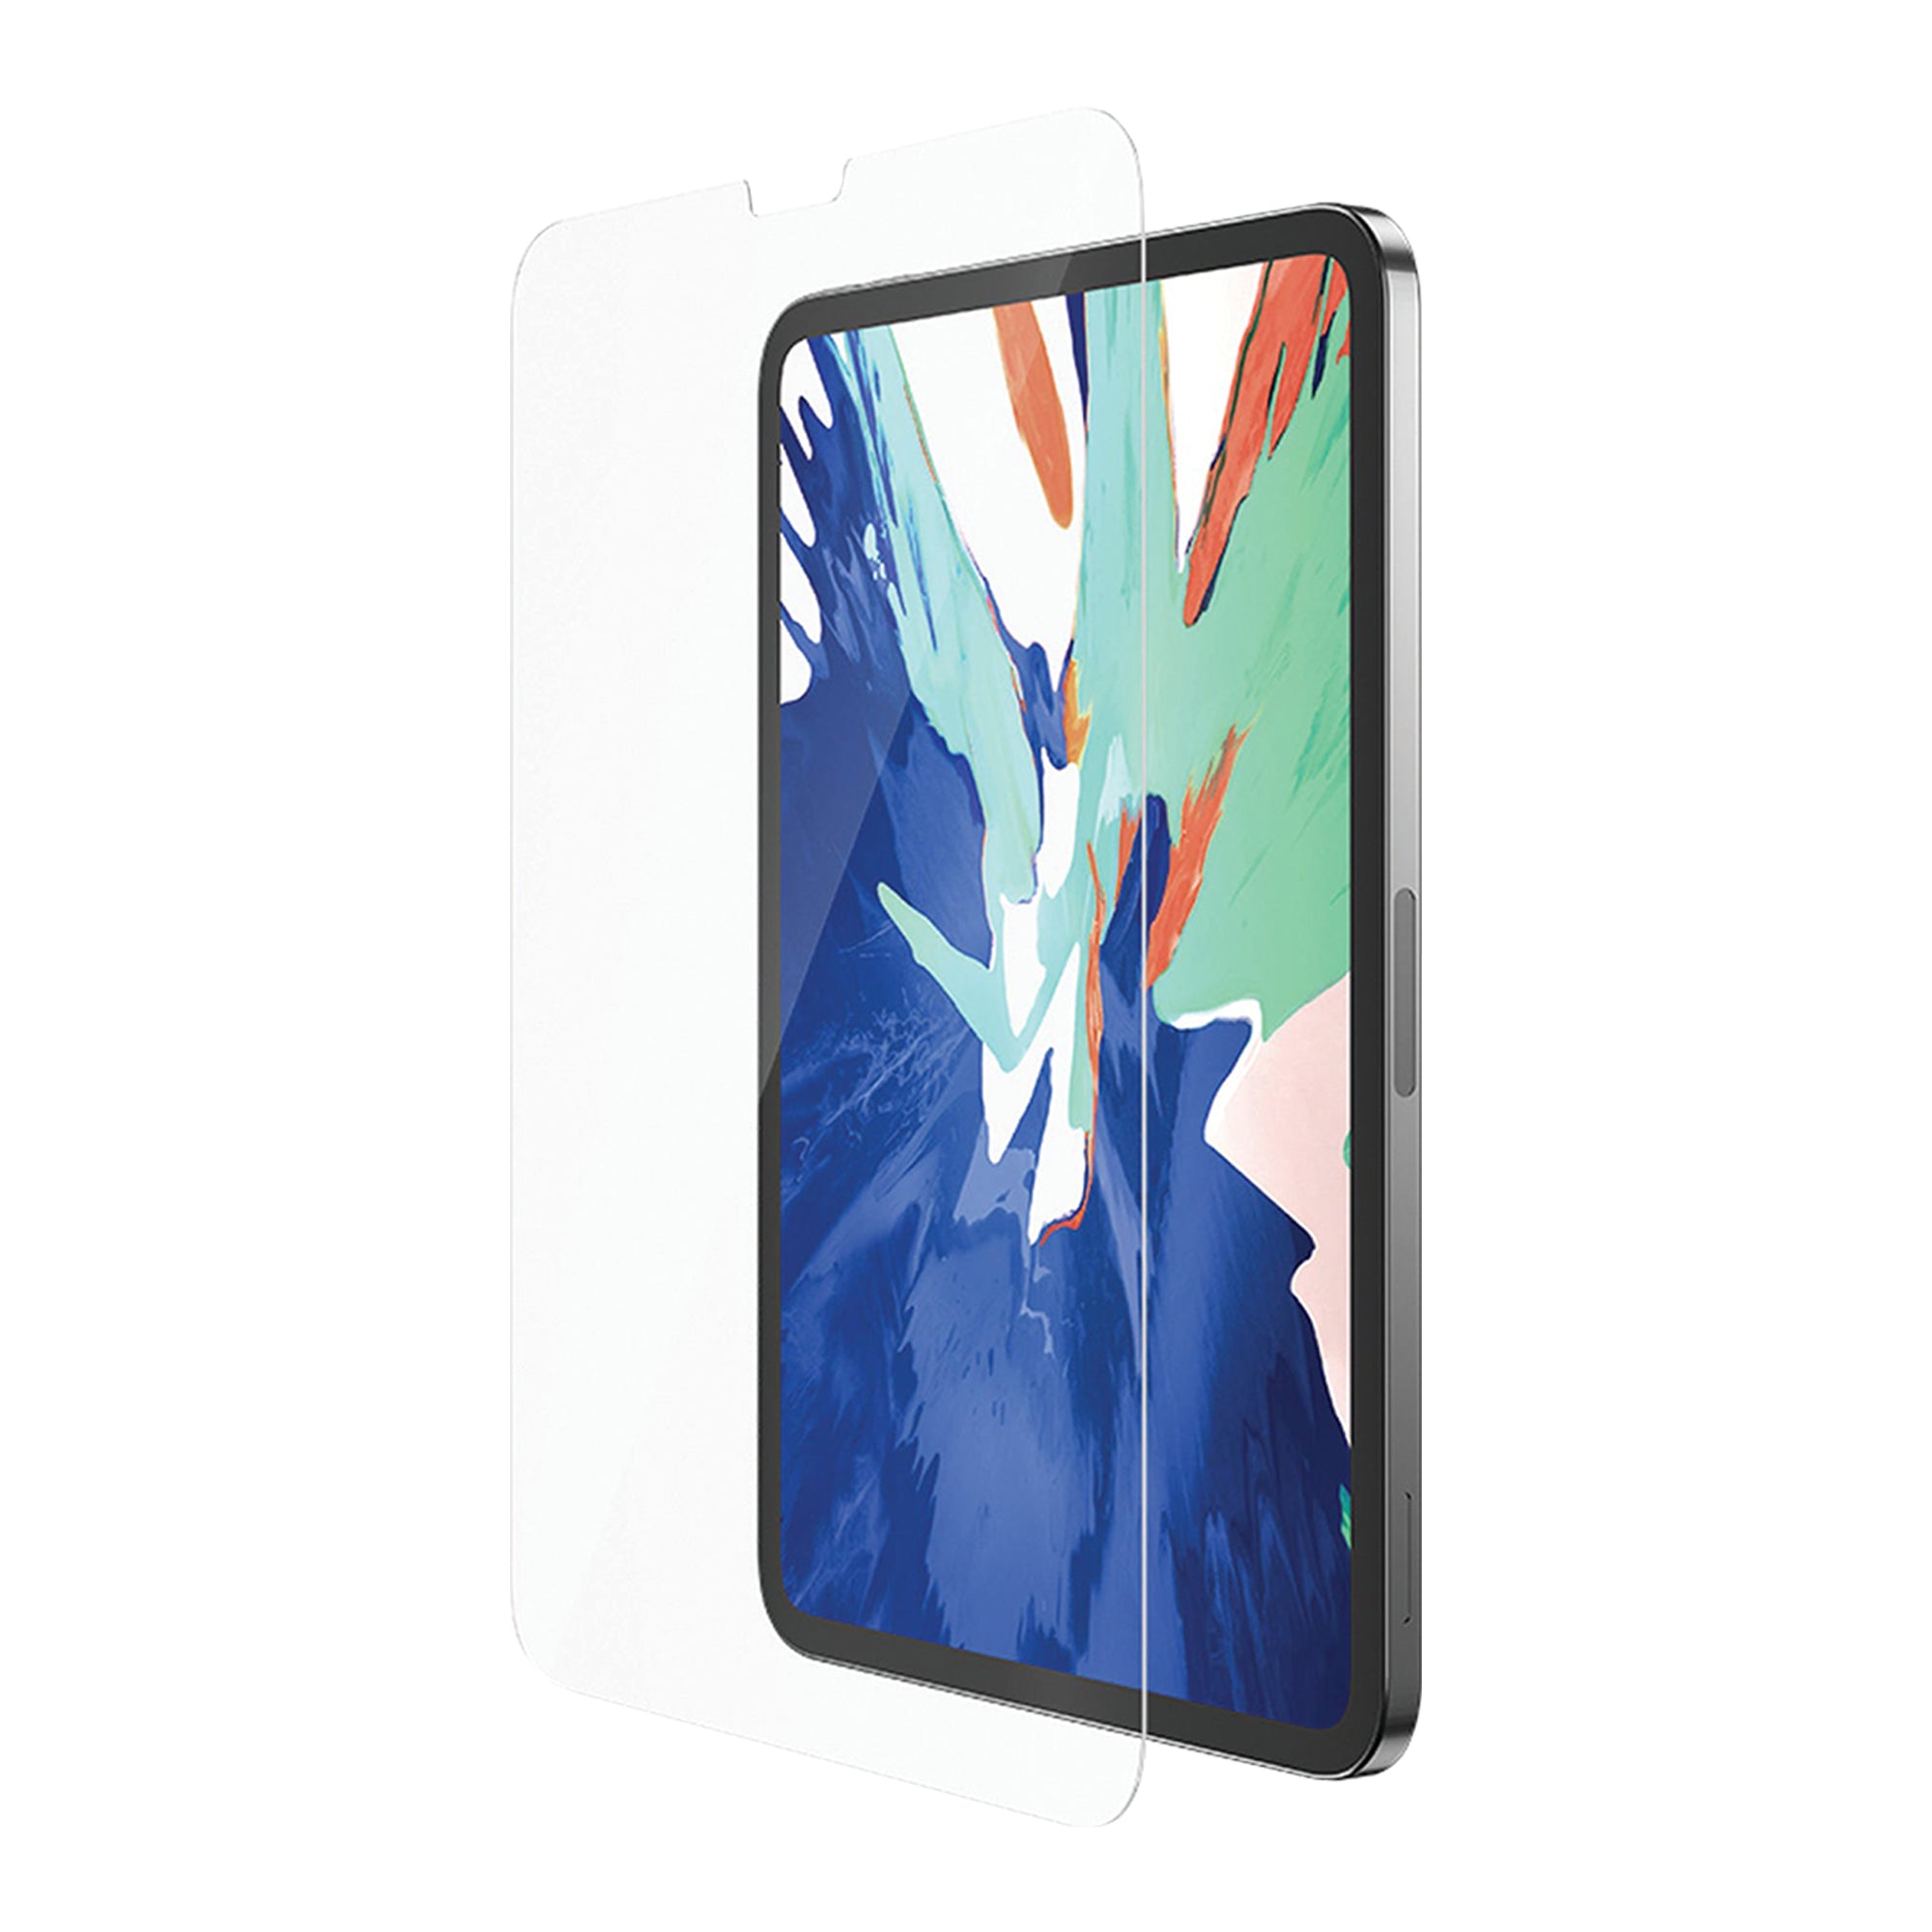 AmazingThing Supreme Tempered Glass for iPad